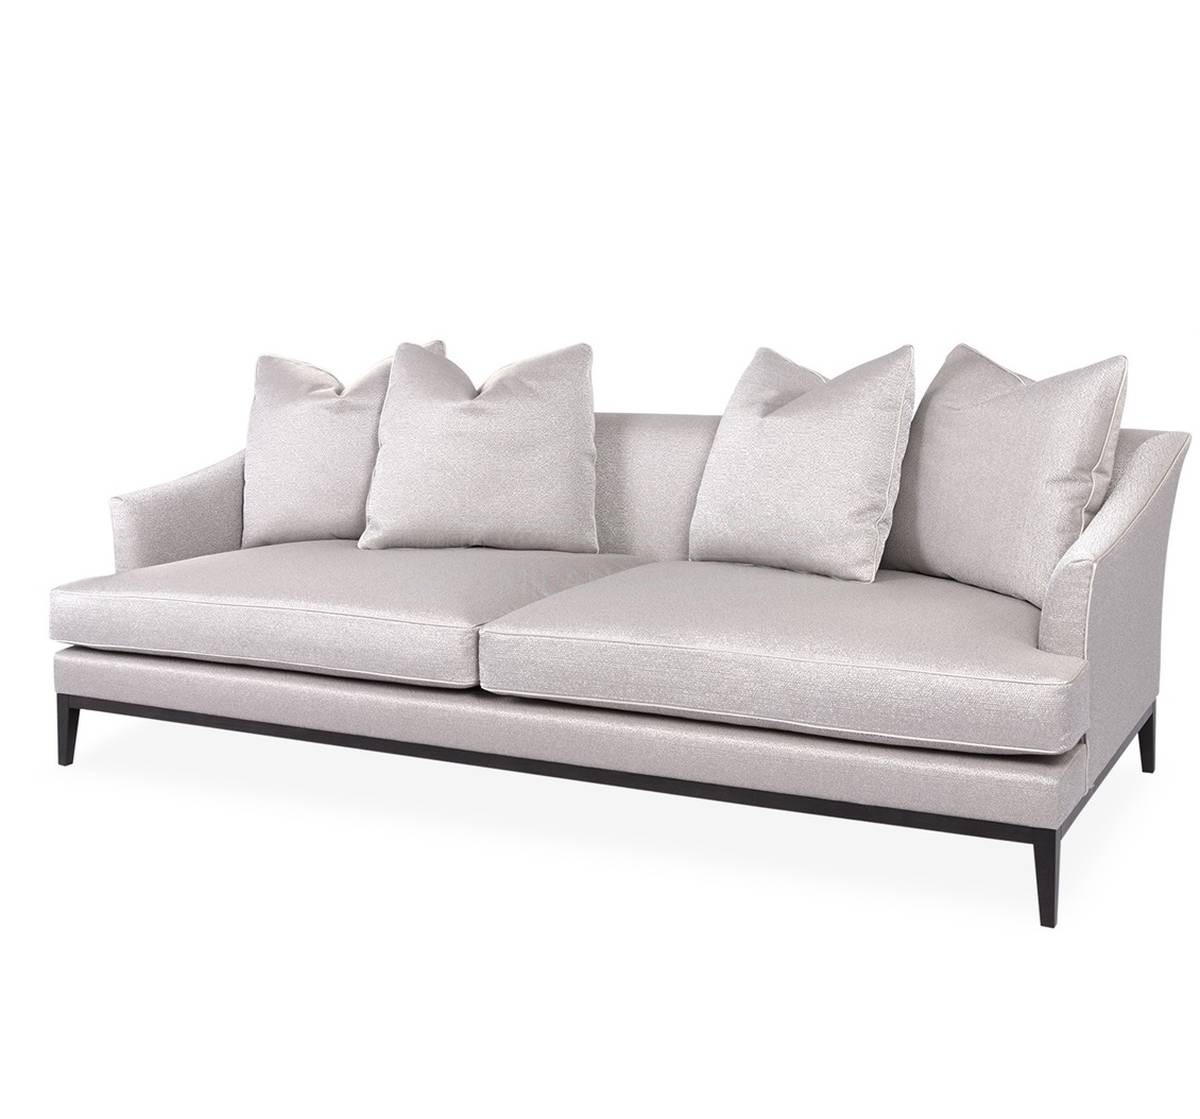 Прямой диван Sofa Beaumont из Великобритании фабрики THE SOFA & CHAIR Company